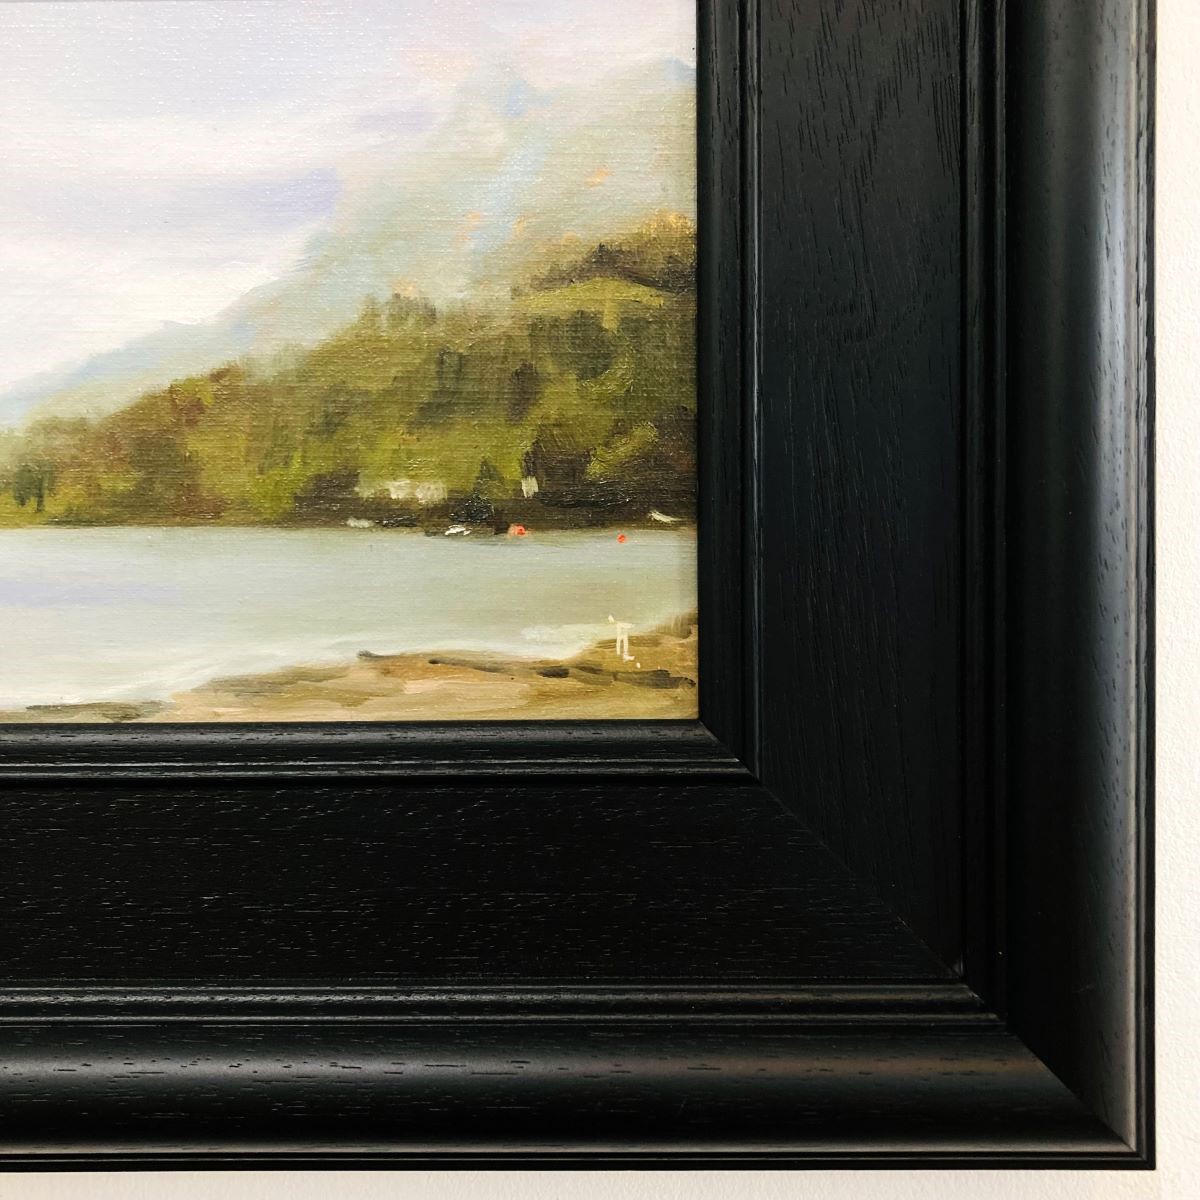 'Serene Loch Shiel' by artist Fiona Longley